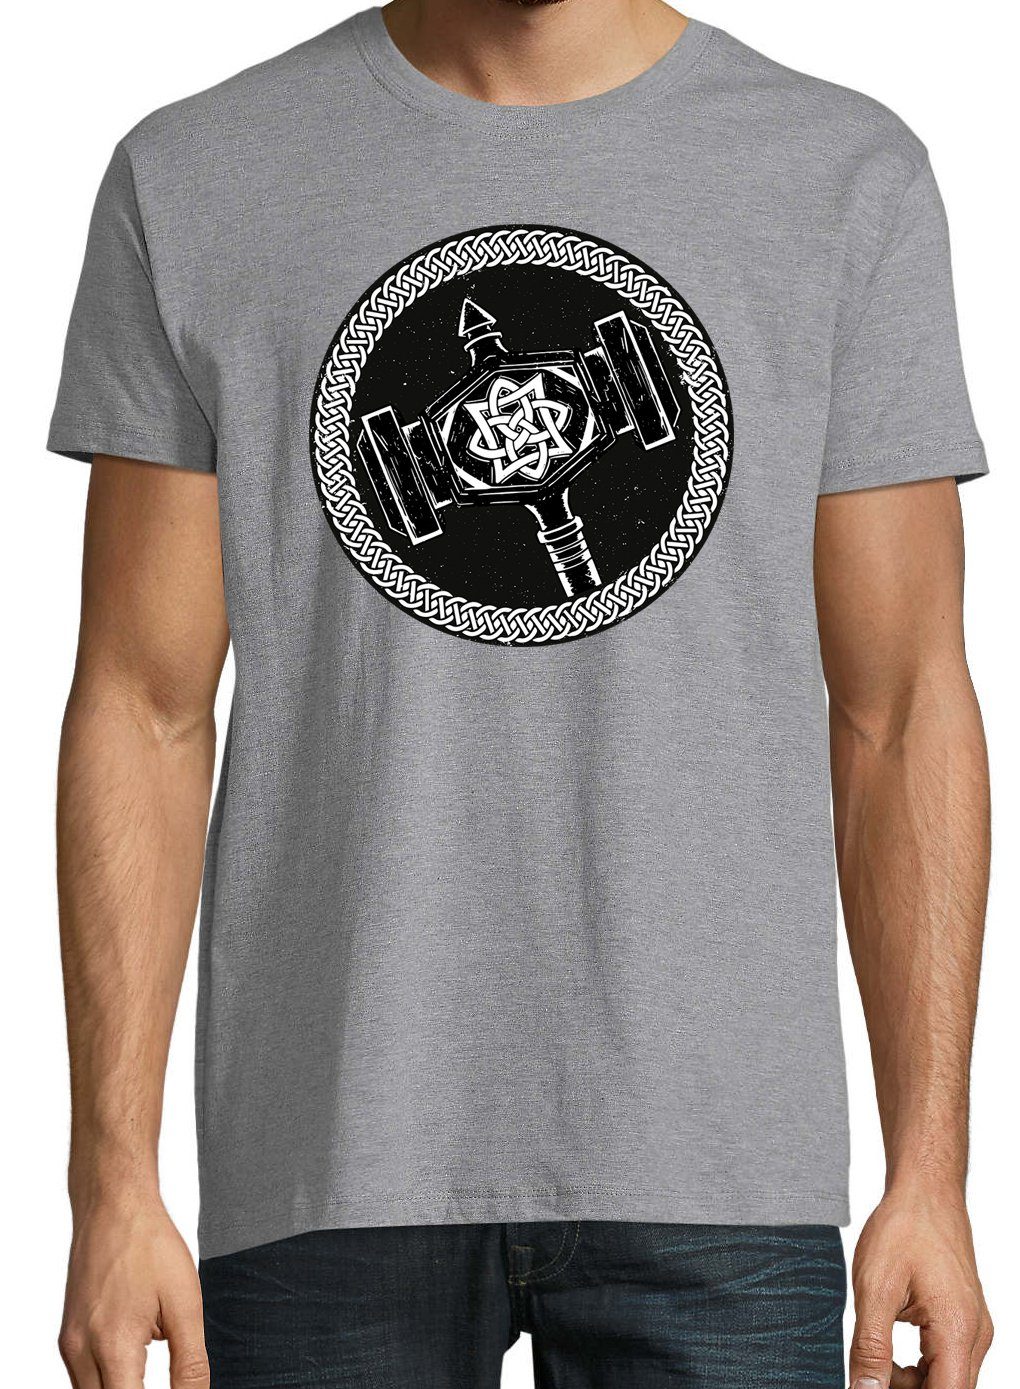 Herren Frontprint Grau Shirt Hammer Designz T-Shirt Viking Youth trendigem mit